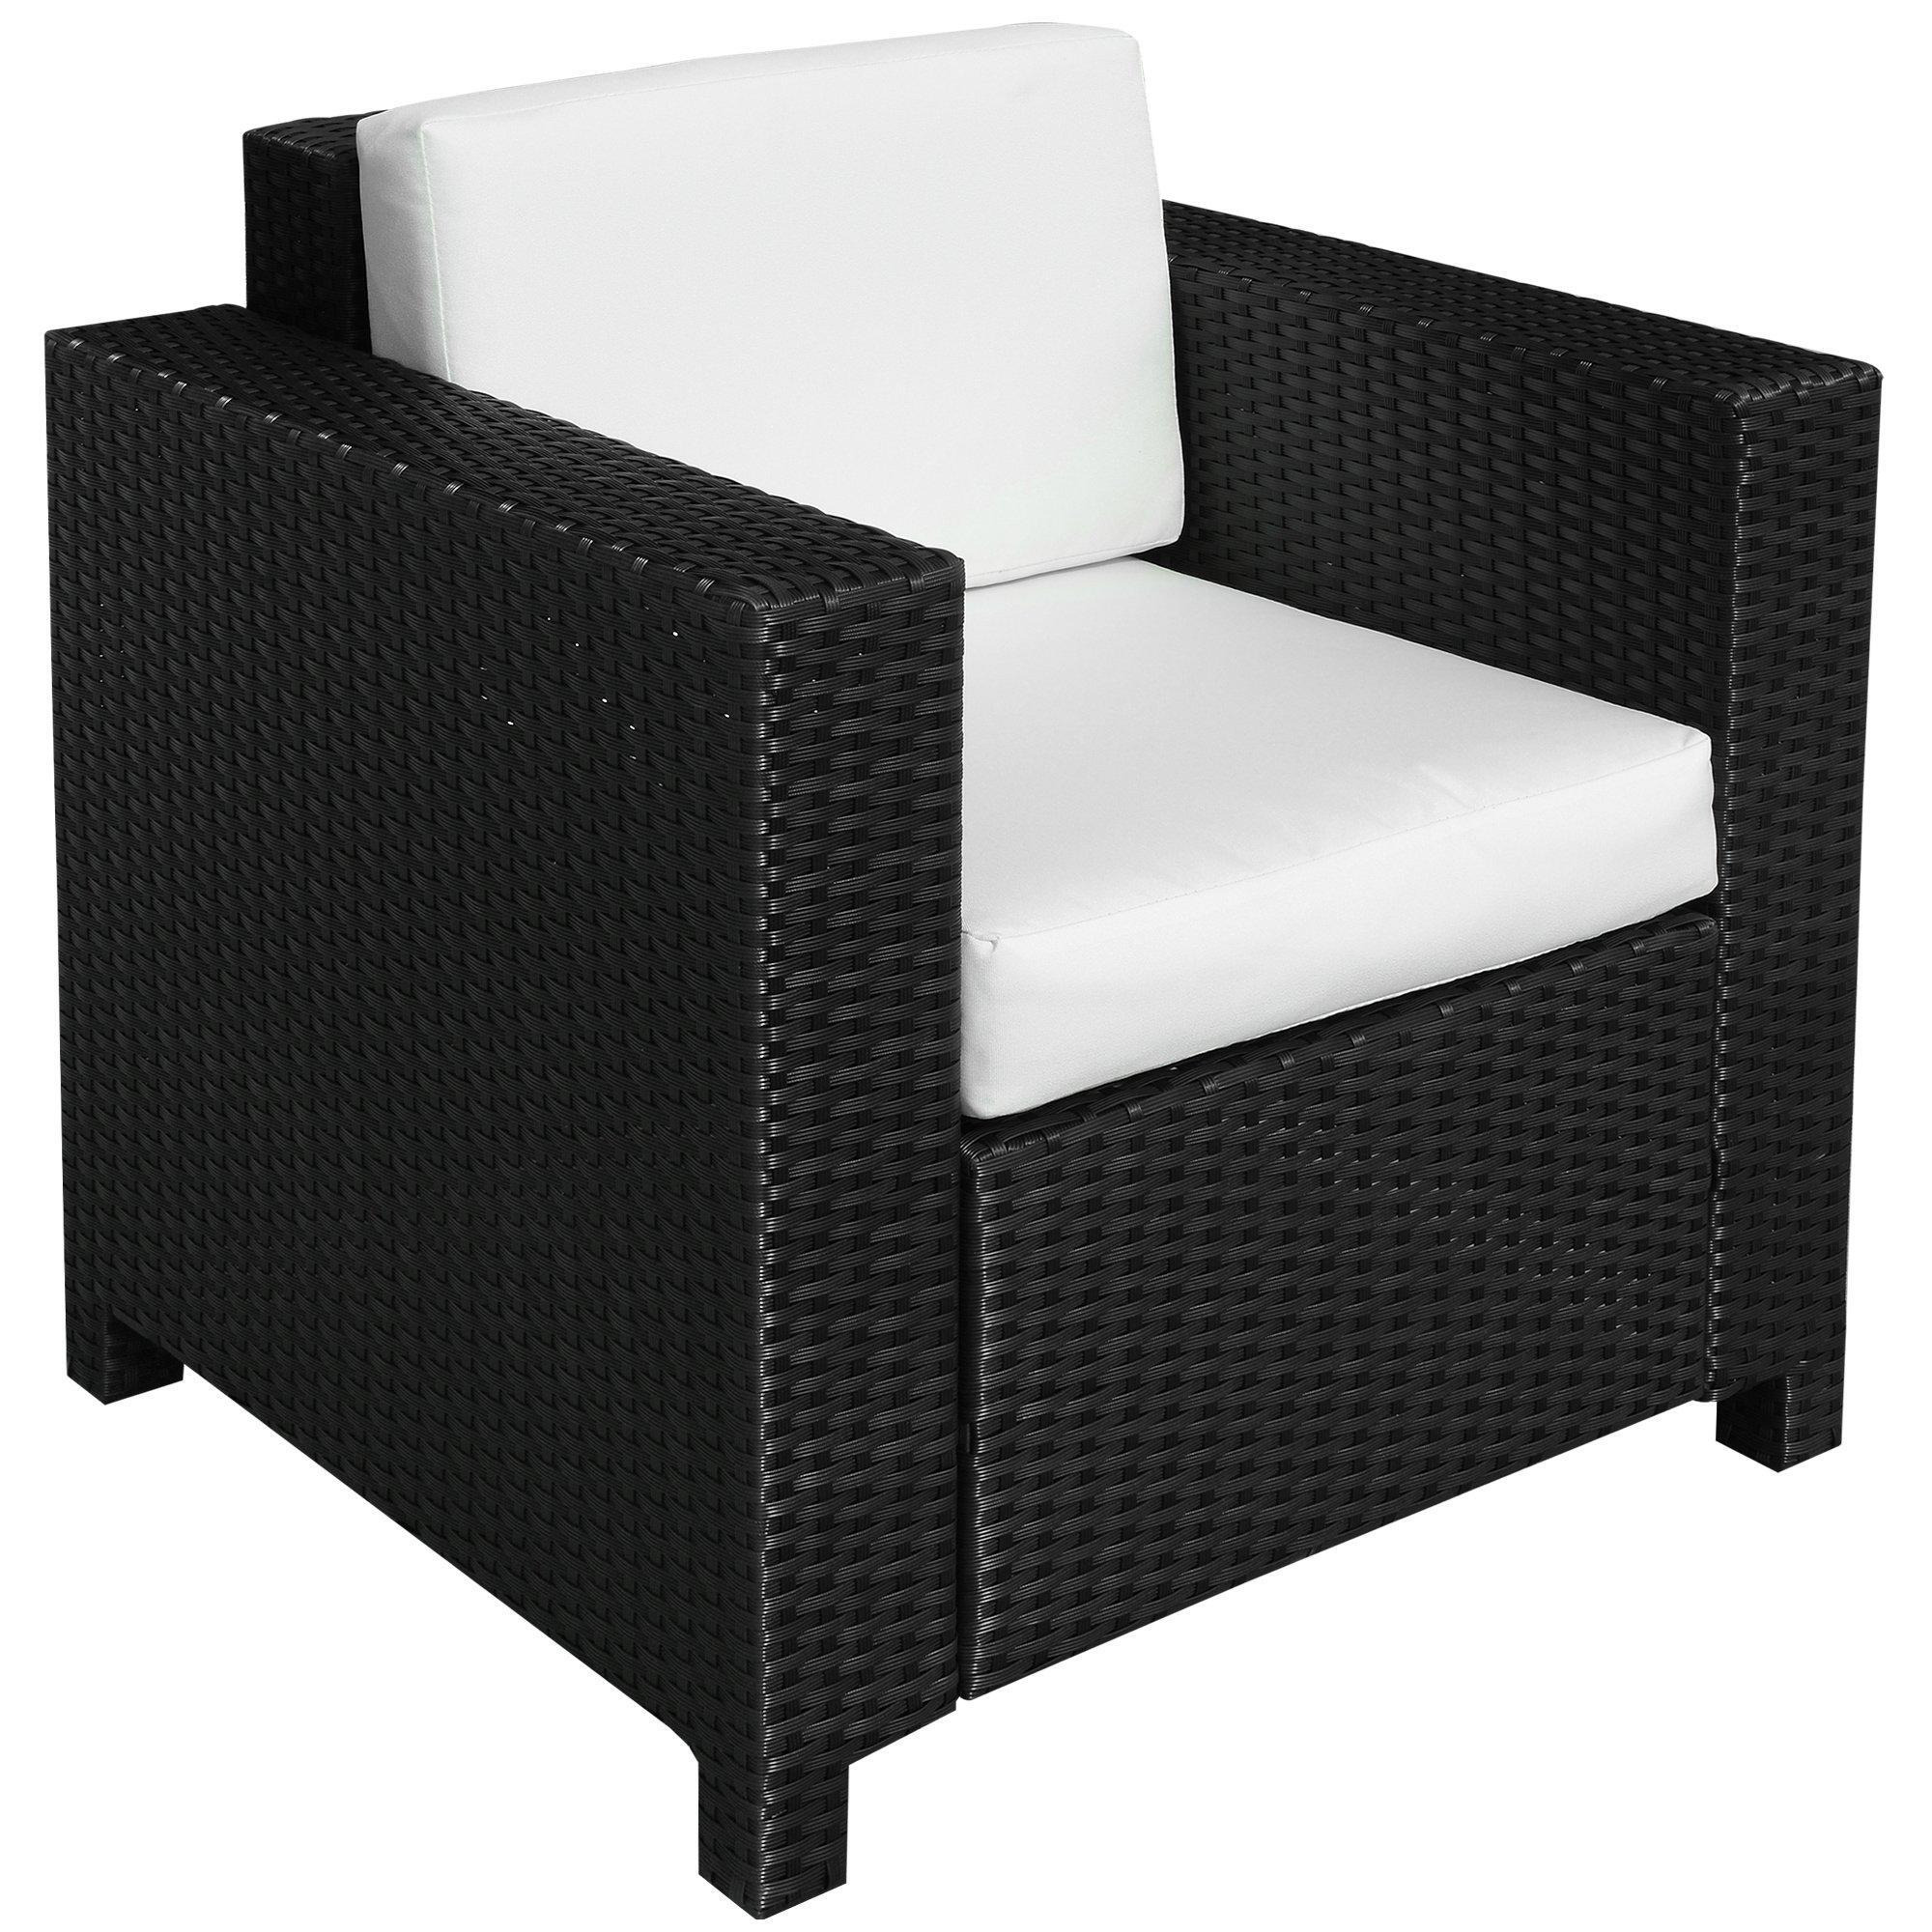 Rattan Garden Furniture Weave Wicker 1 Seater Sofa with Cushion - image 1